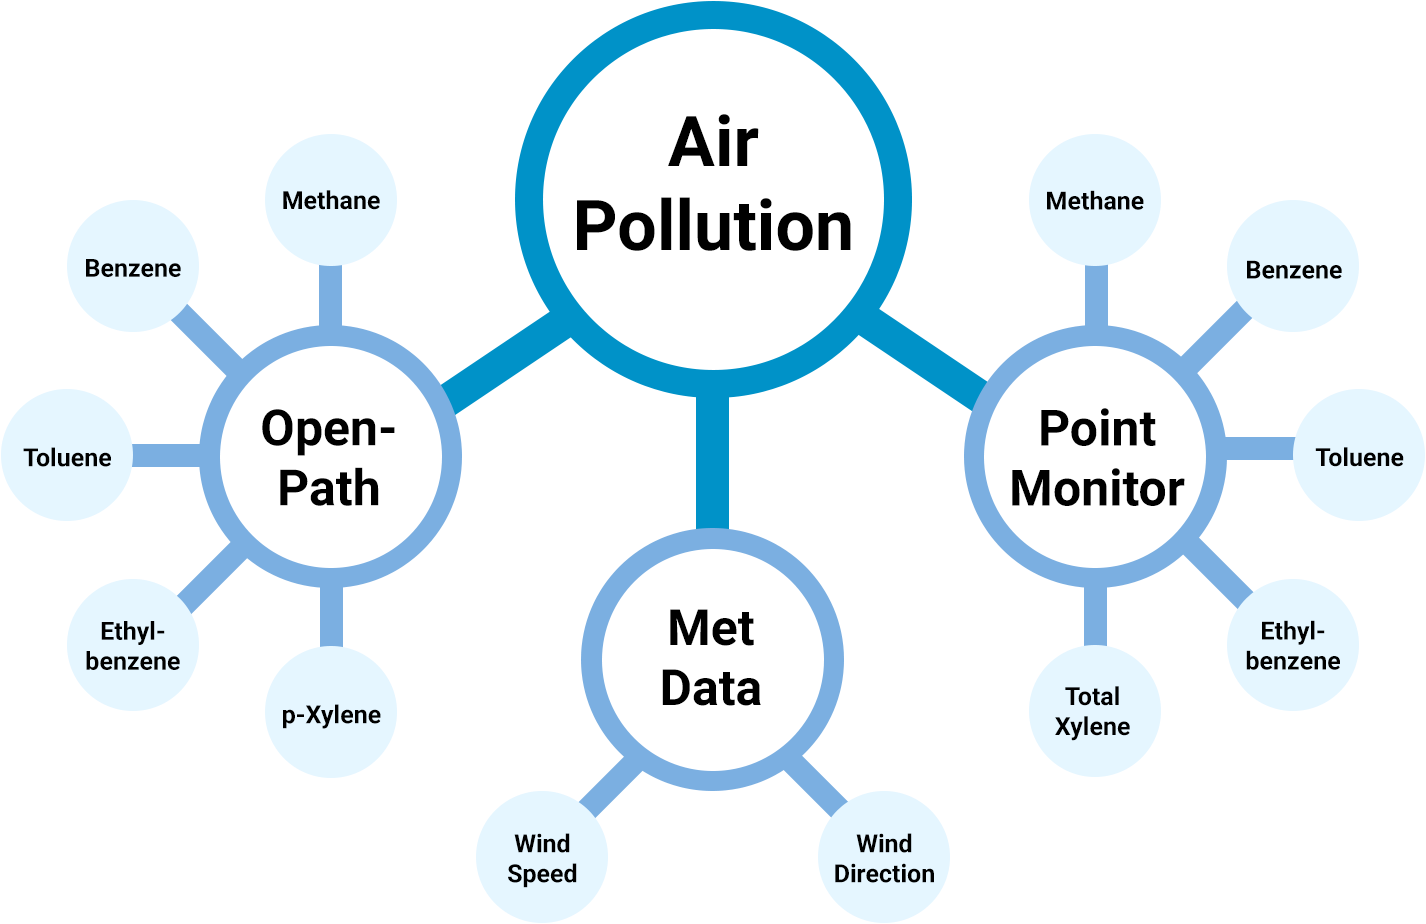 Air pollution monitoring